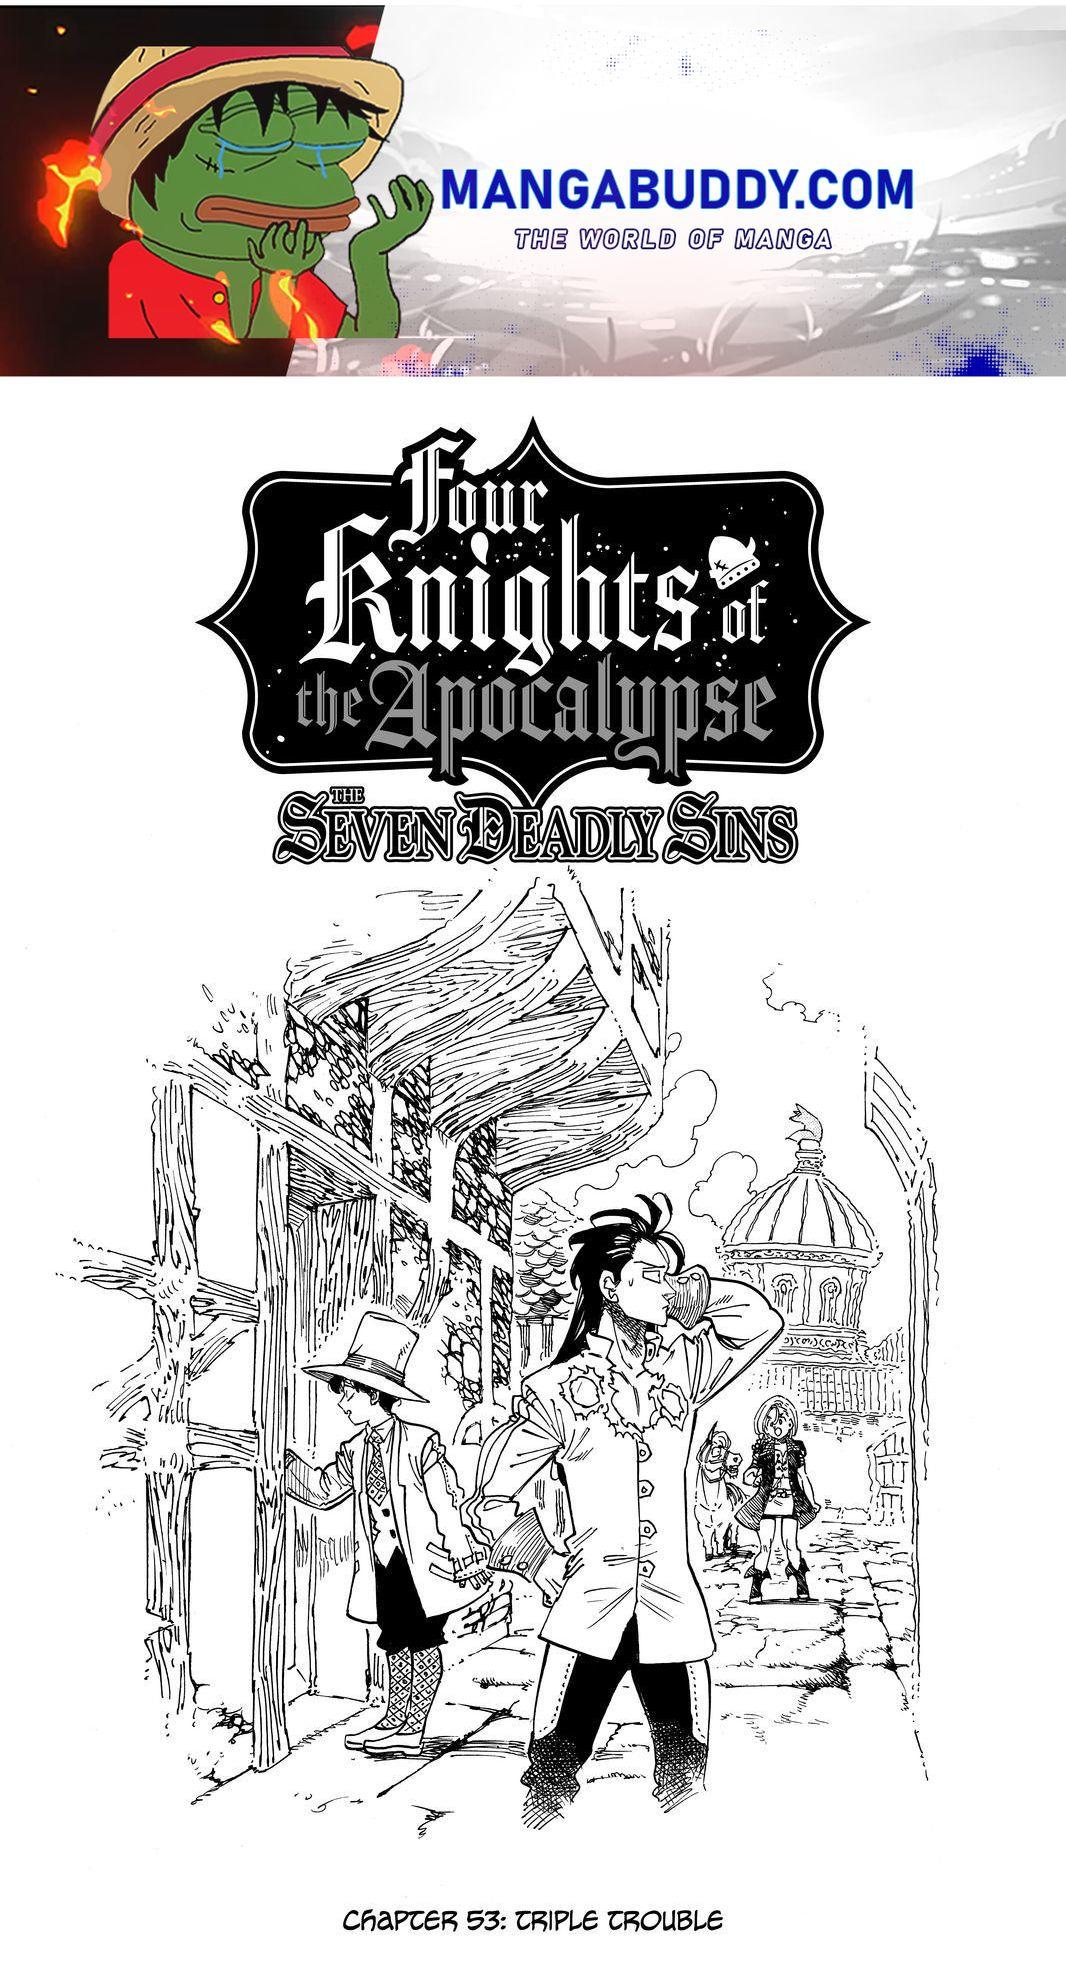 Read Knights & Magic Chapter 91 - Manganelo